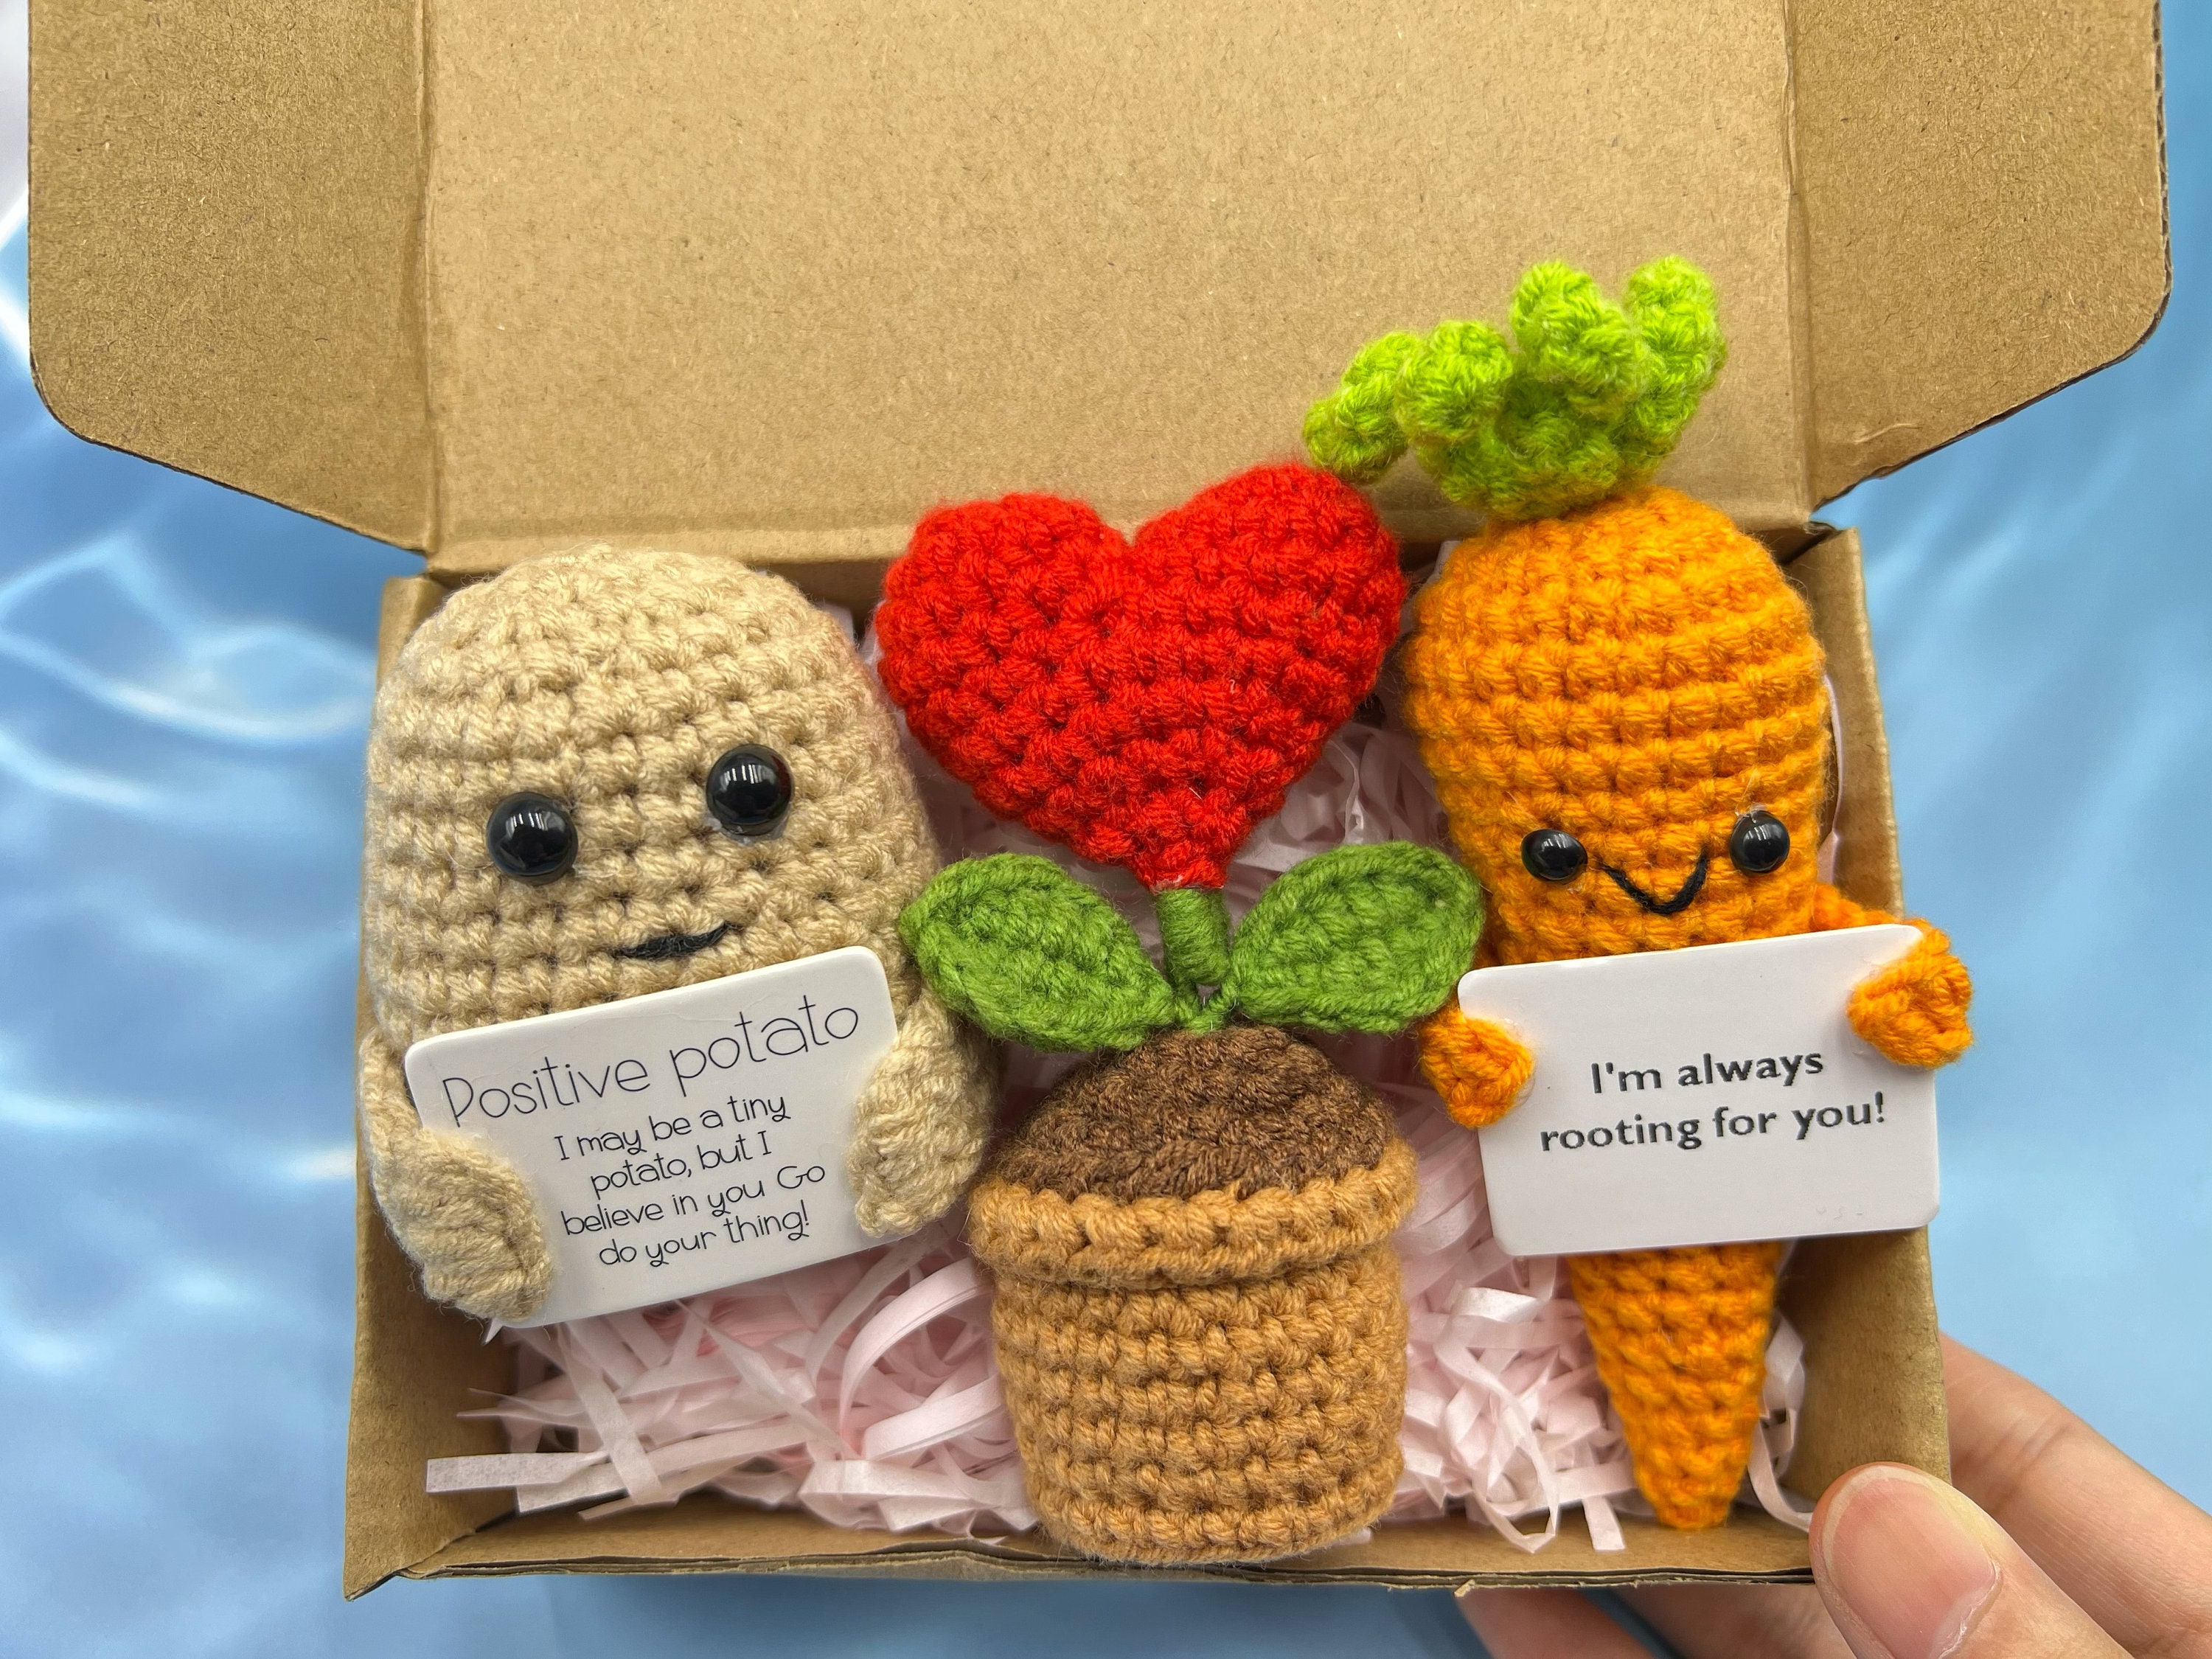 Custom Crochet Positive Potato/rooting for You Carrot With Crochet Heart  Pot, Desk Accessory,handmade Knitted Positive Carrot,cheering Gift 